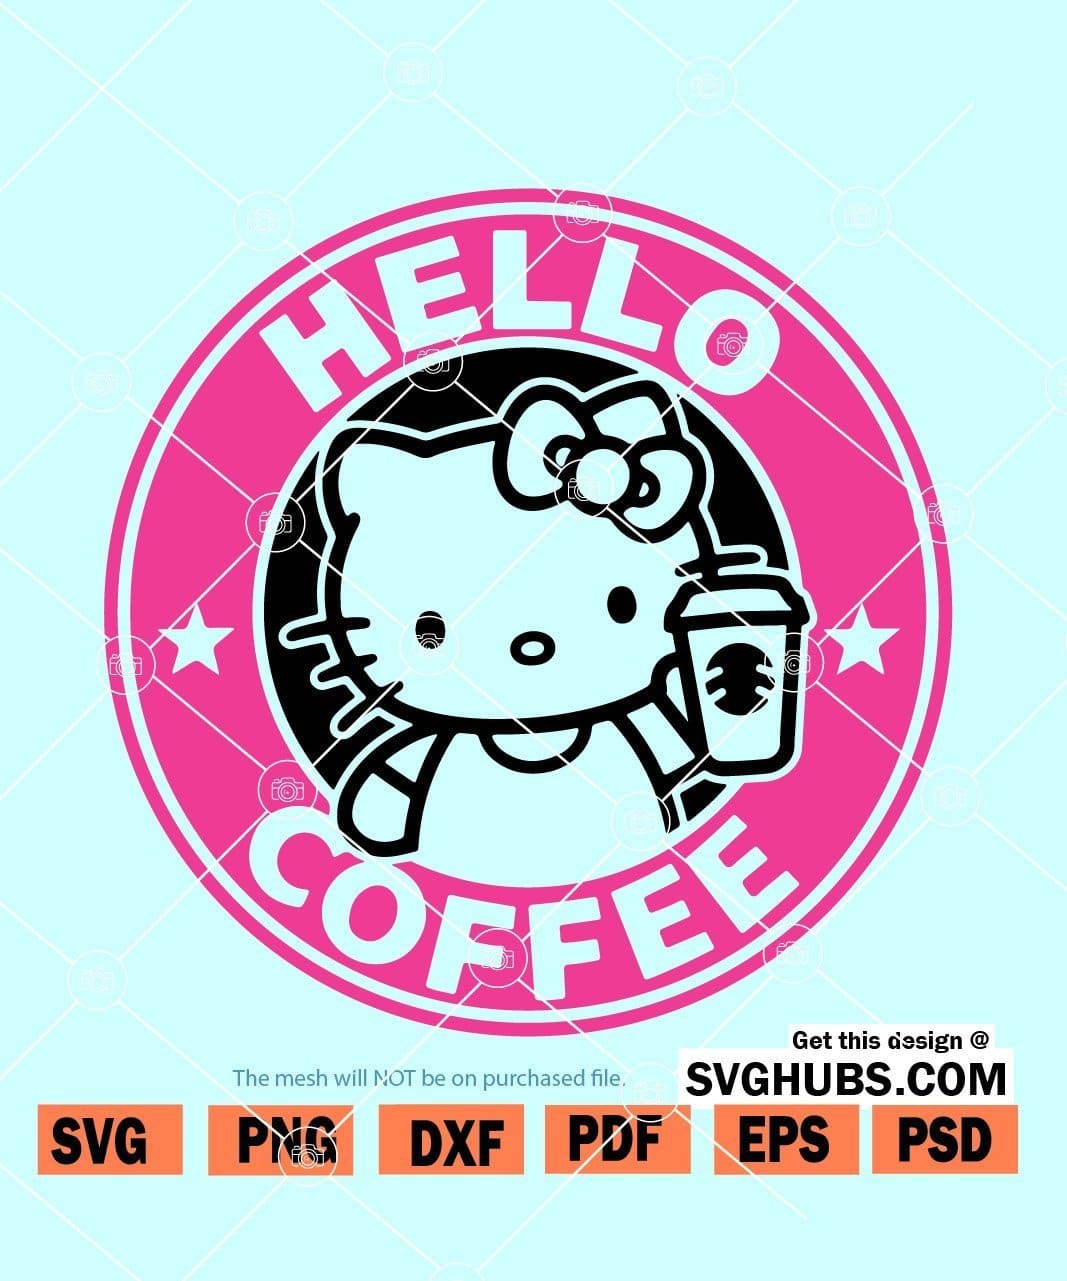 Hello Kitty Starbucks SVG, Hello Kitty Starbucks Logo SVG, Starbuck Cup SVG